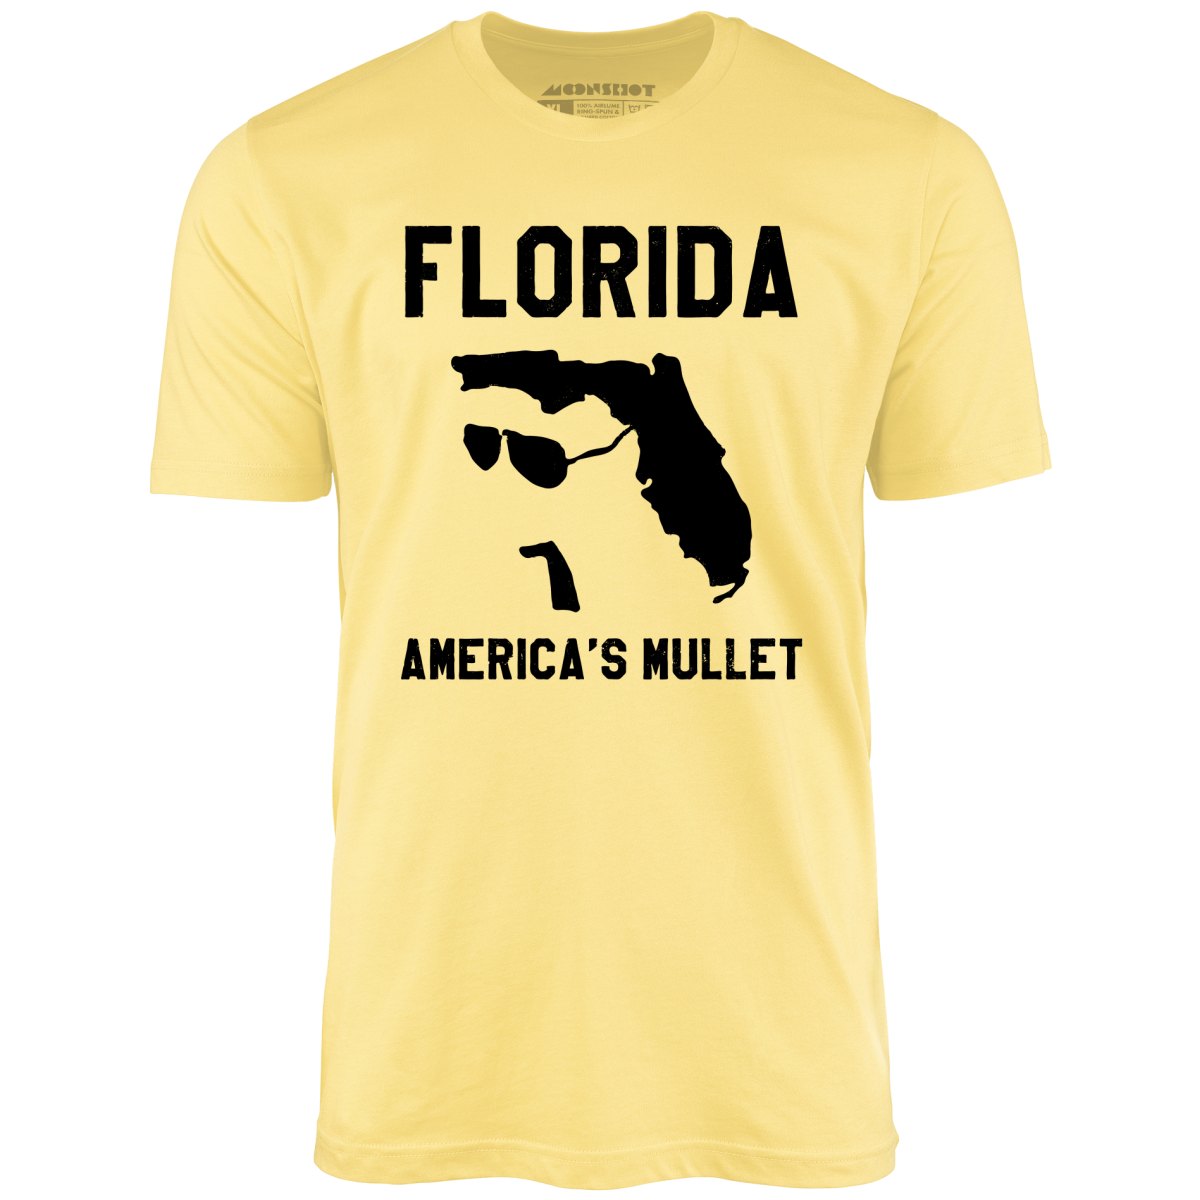 Florida America's Mullet - Unisex T-Shirt